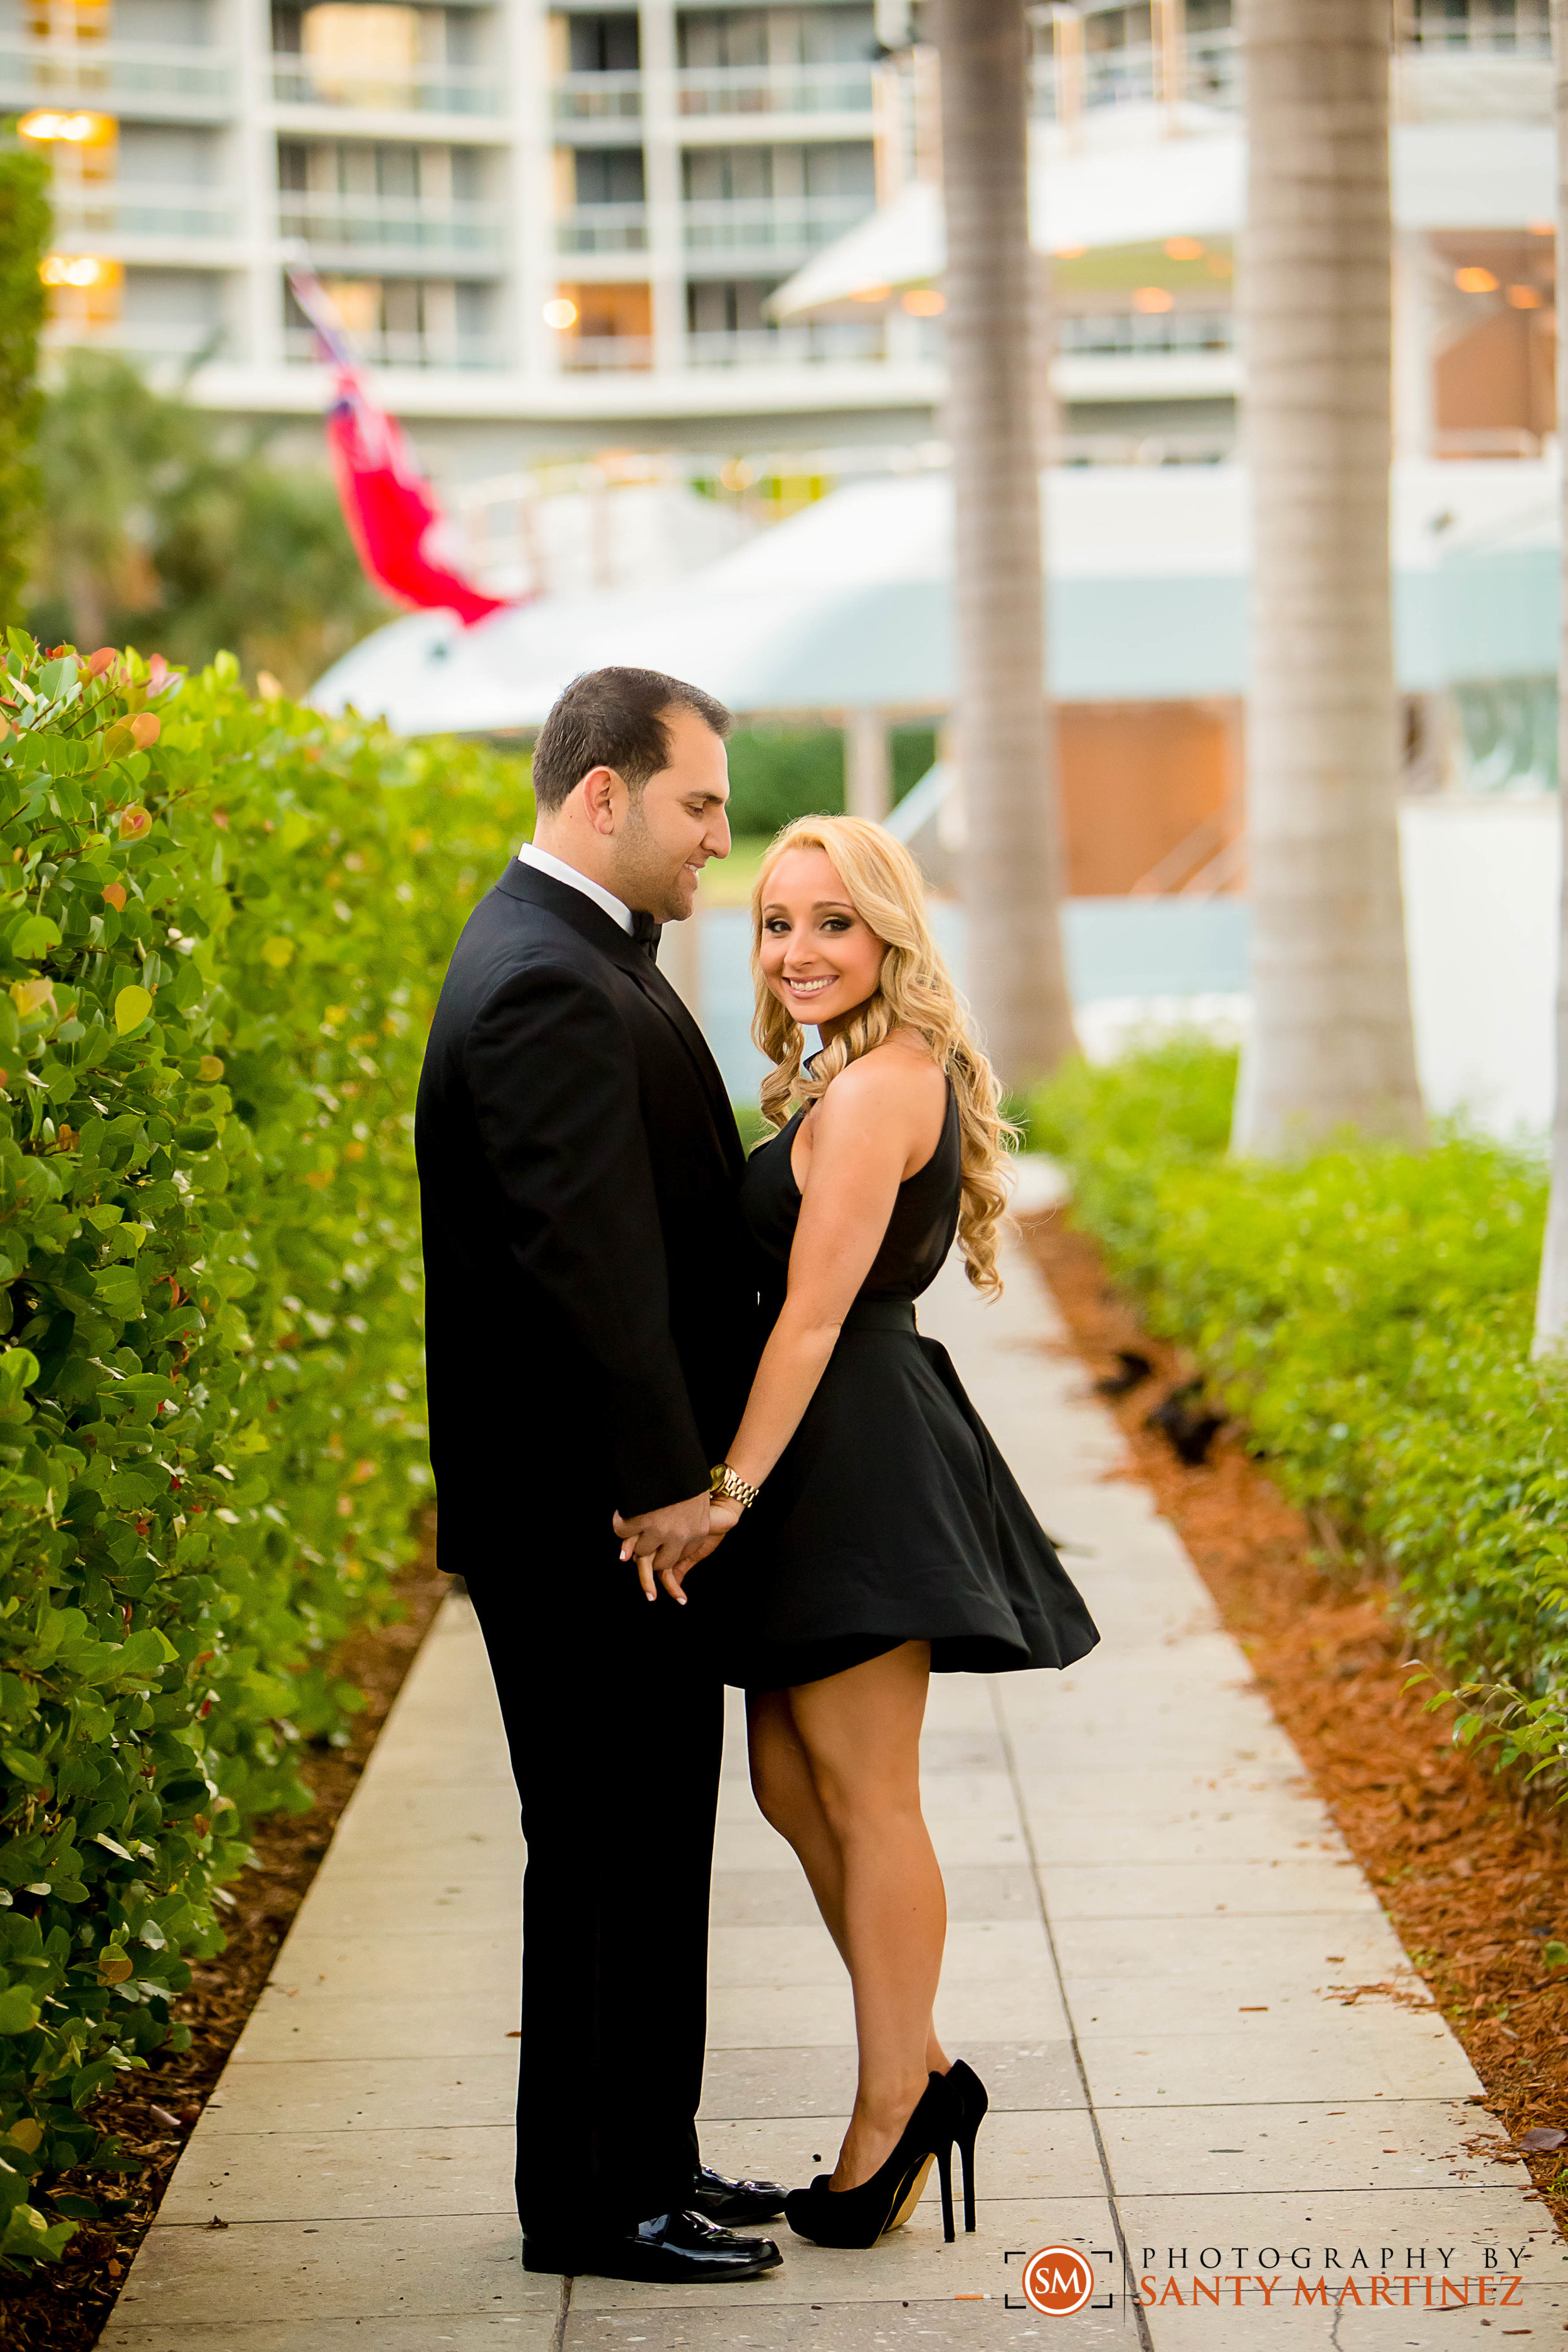 Santy Martinez - Engagement Photographer - Miami - Florida-19.jpg